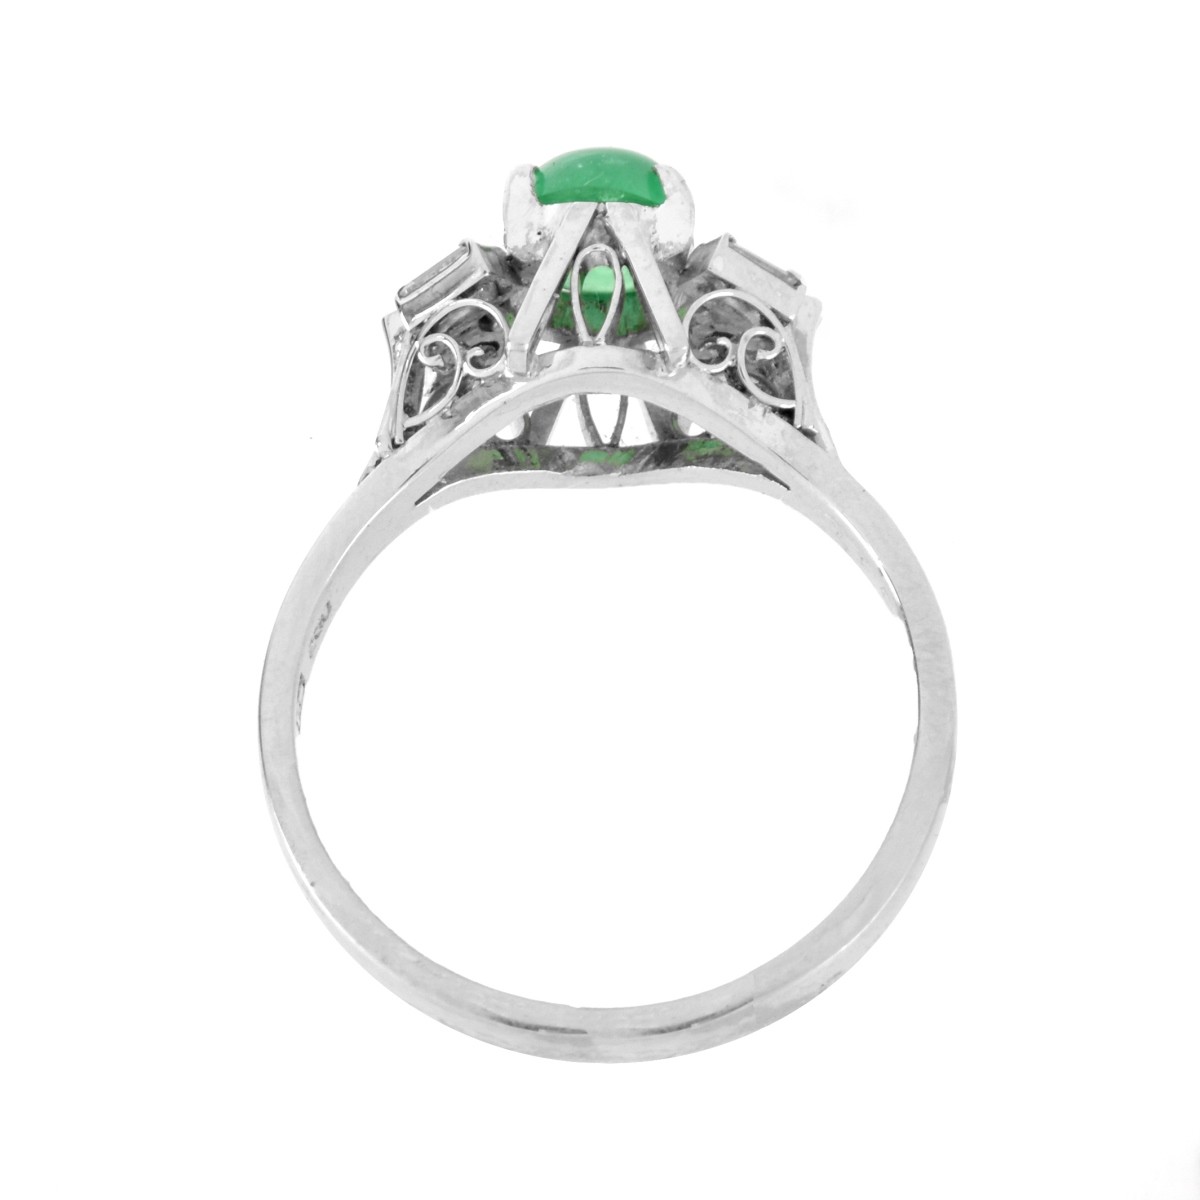 Emerald, Diamond and Platinum Ring